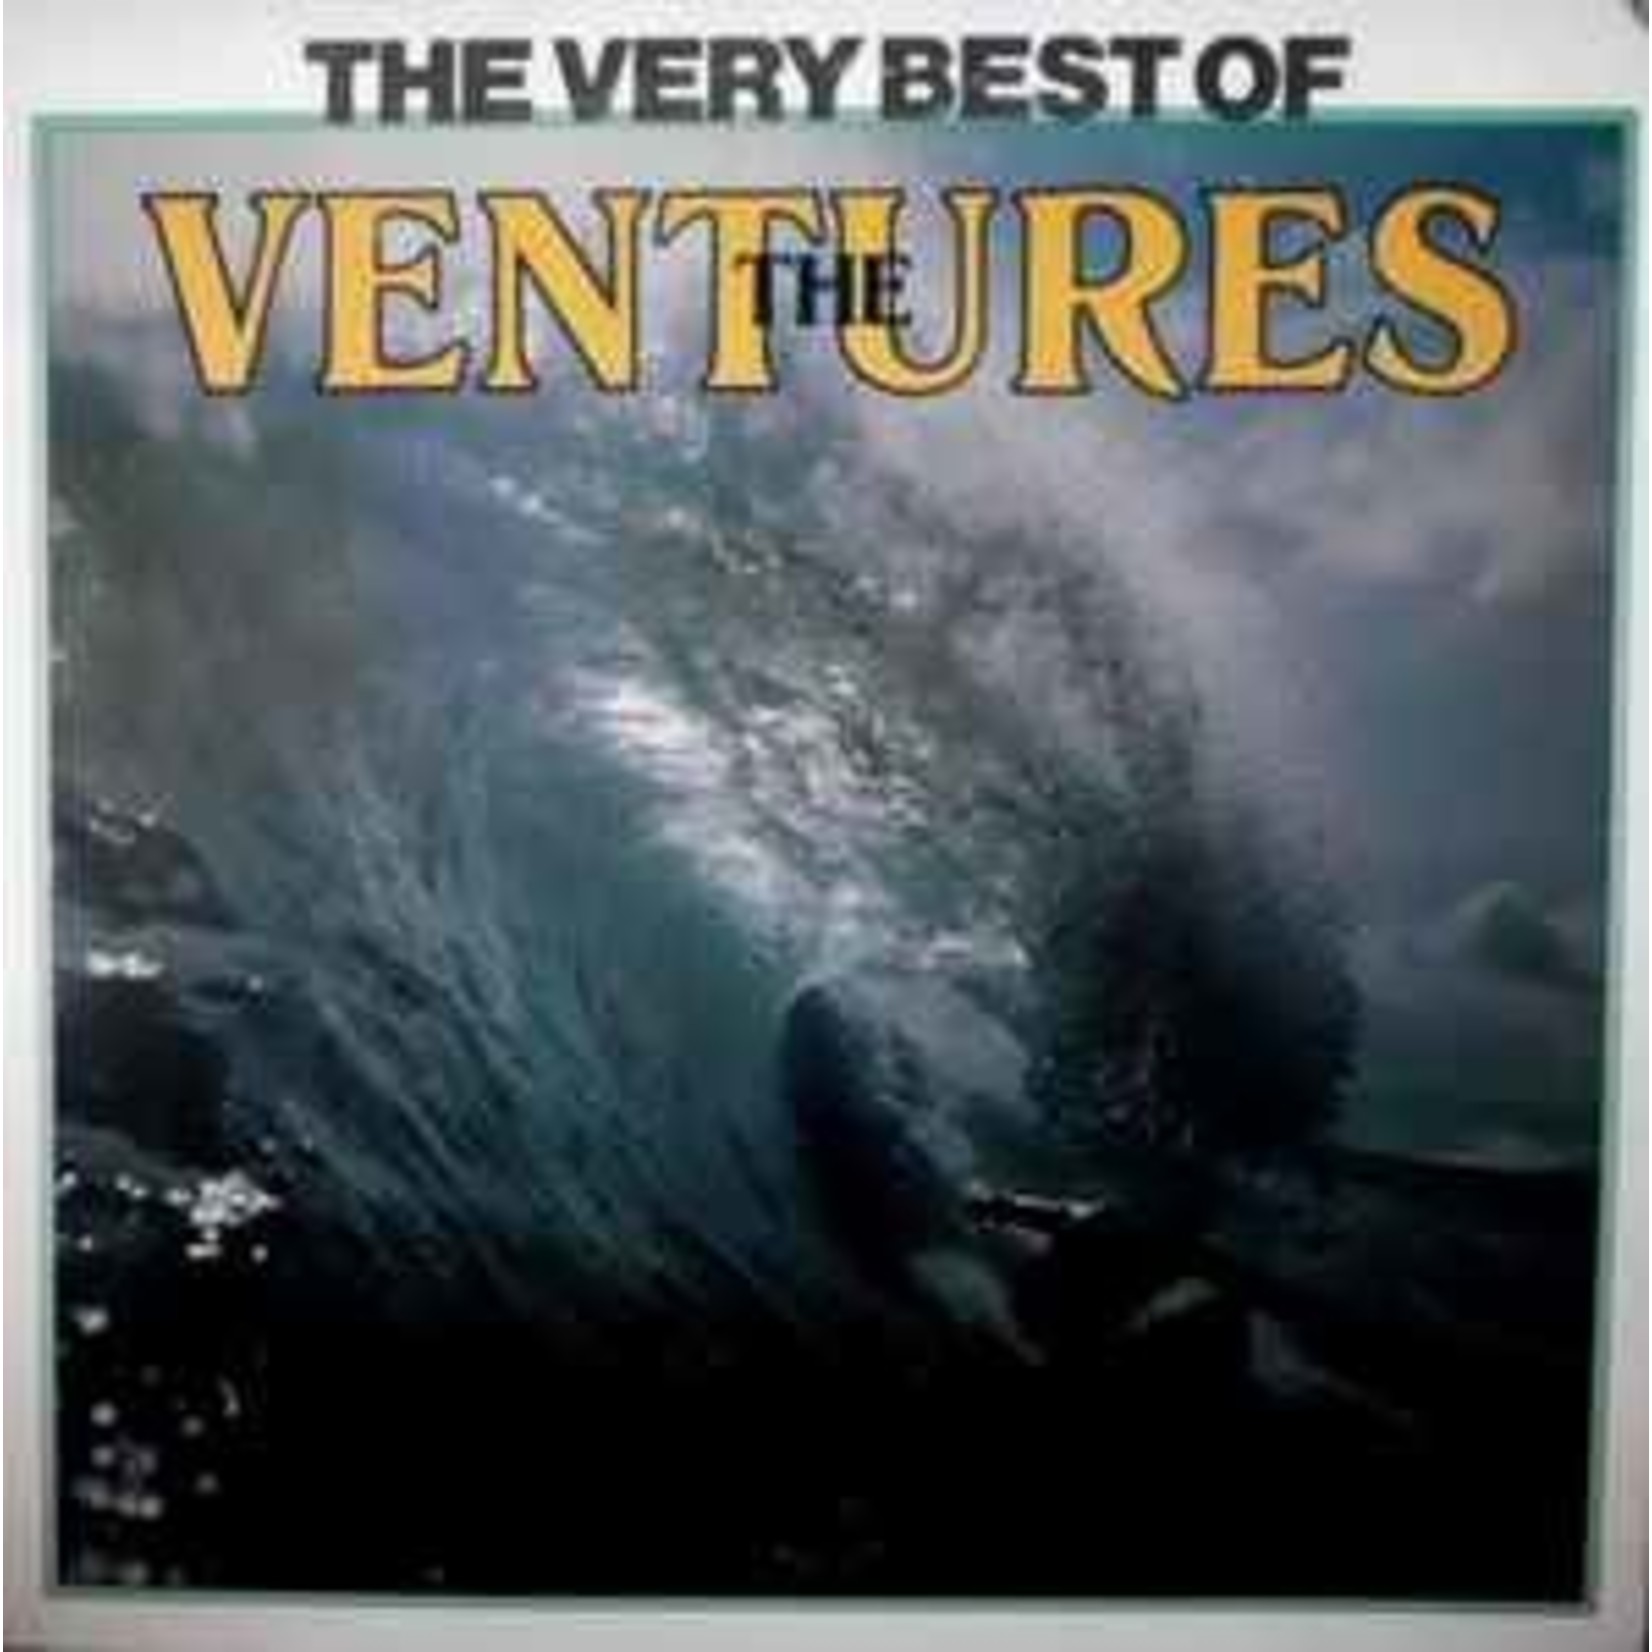 [Vintage] Ventures - The Very Best of...